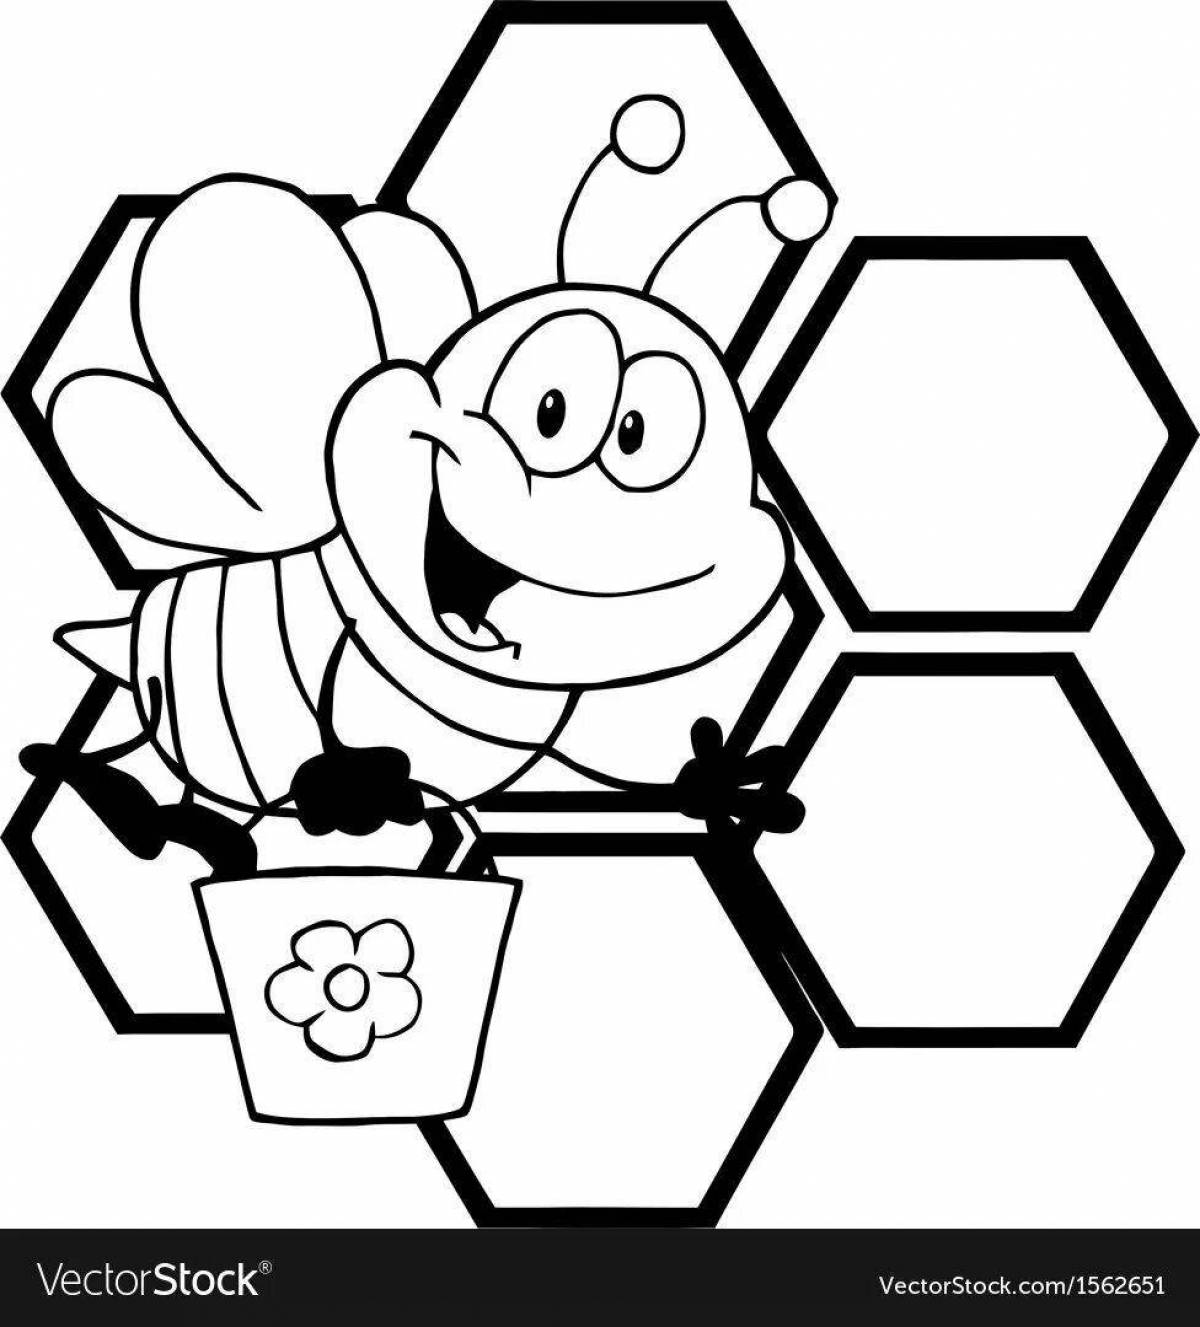 Adorable honeycomb coloring book for schoolchildren